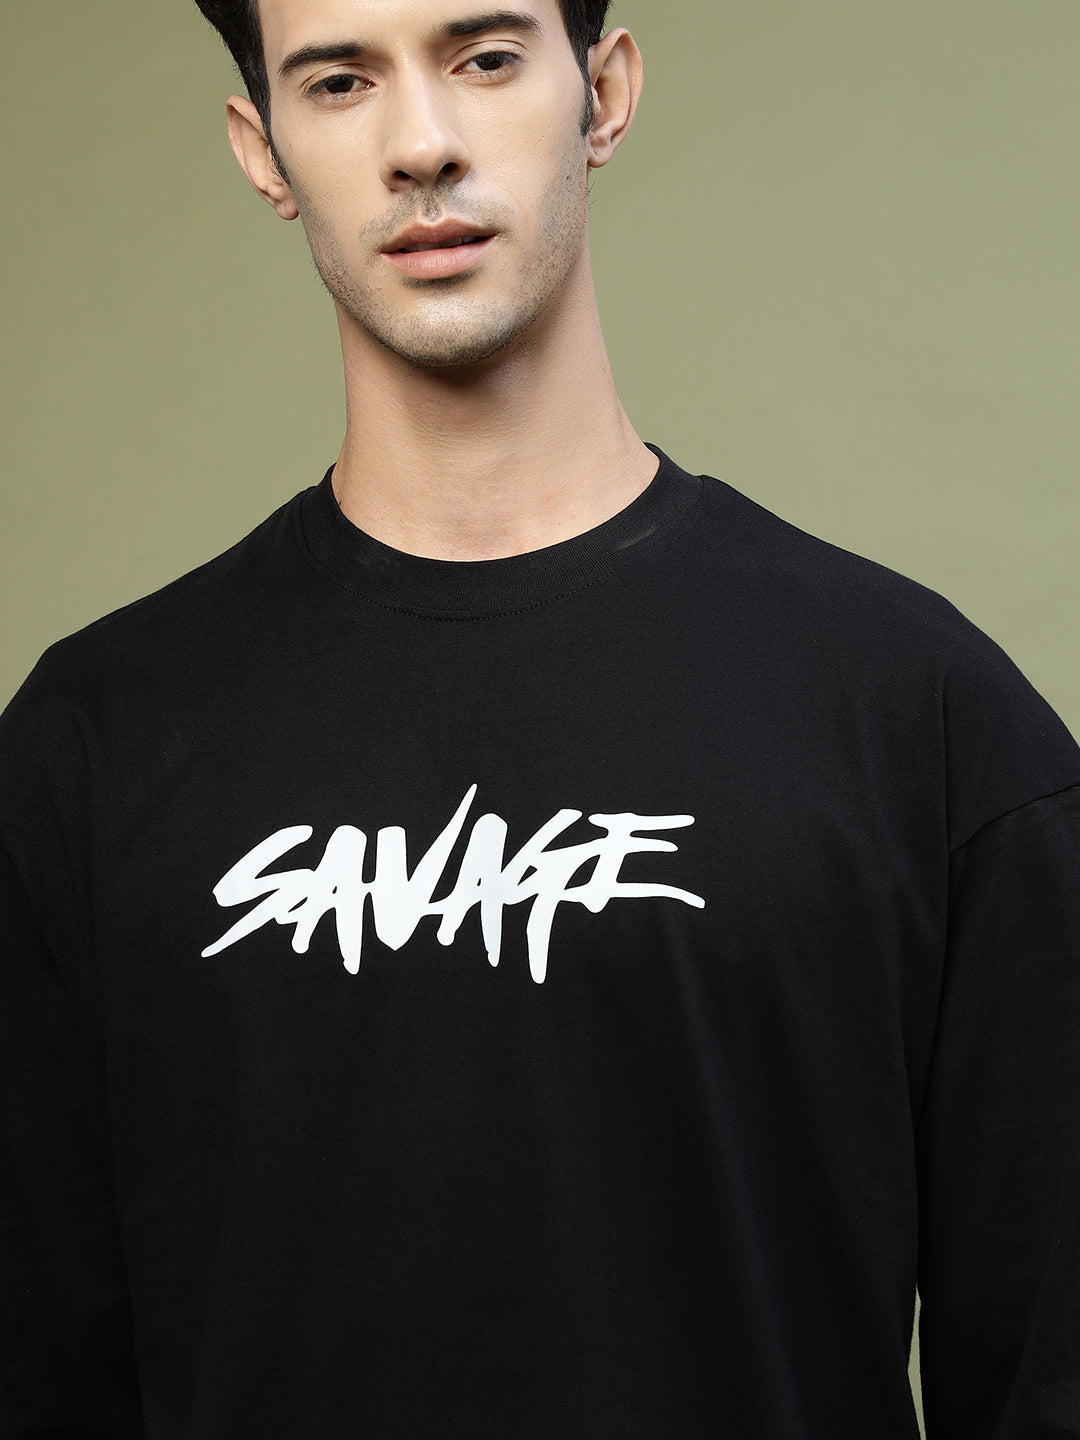 Savage Unisex Black Oversized Tee By Gavin Paris